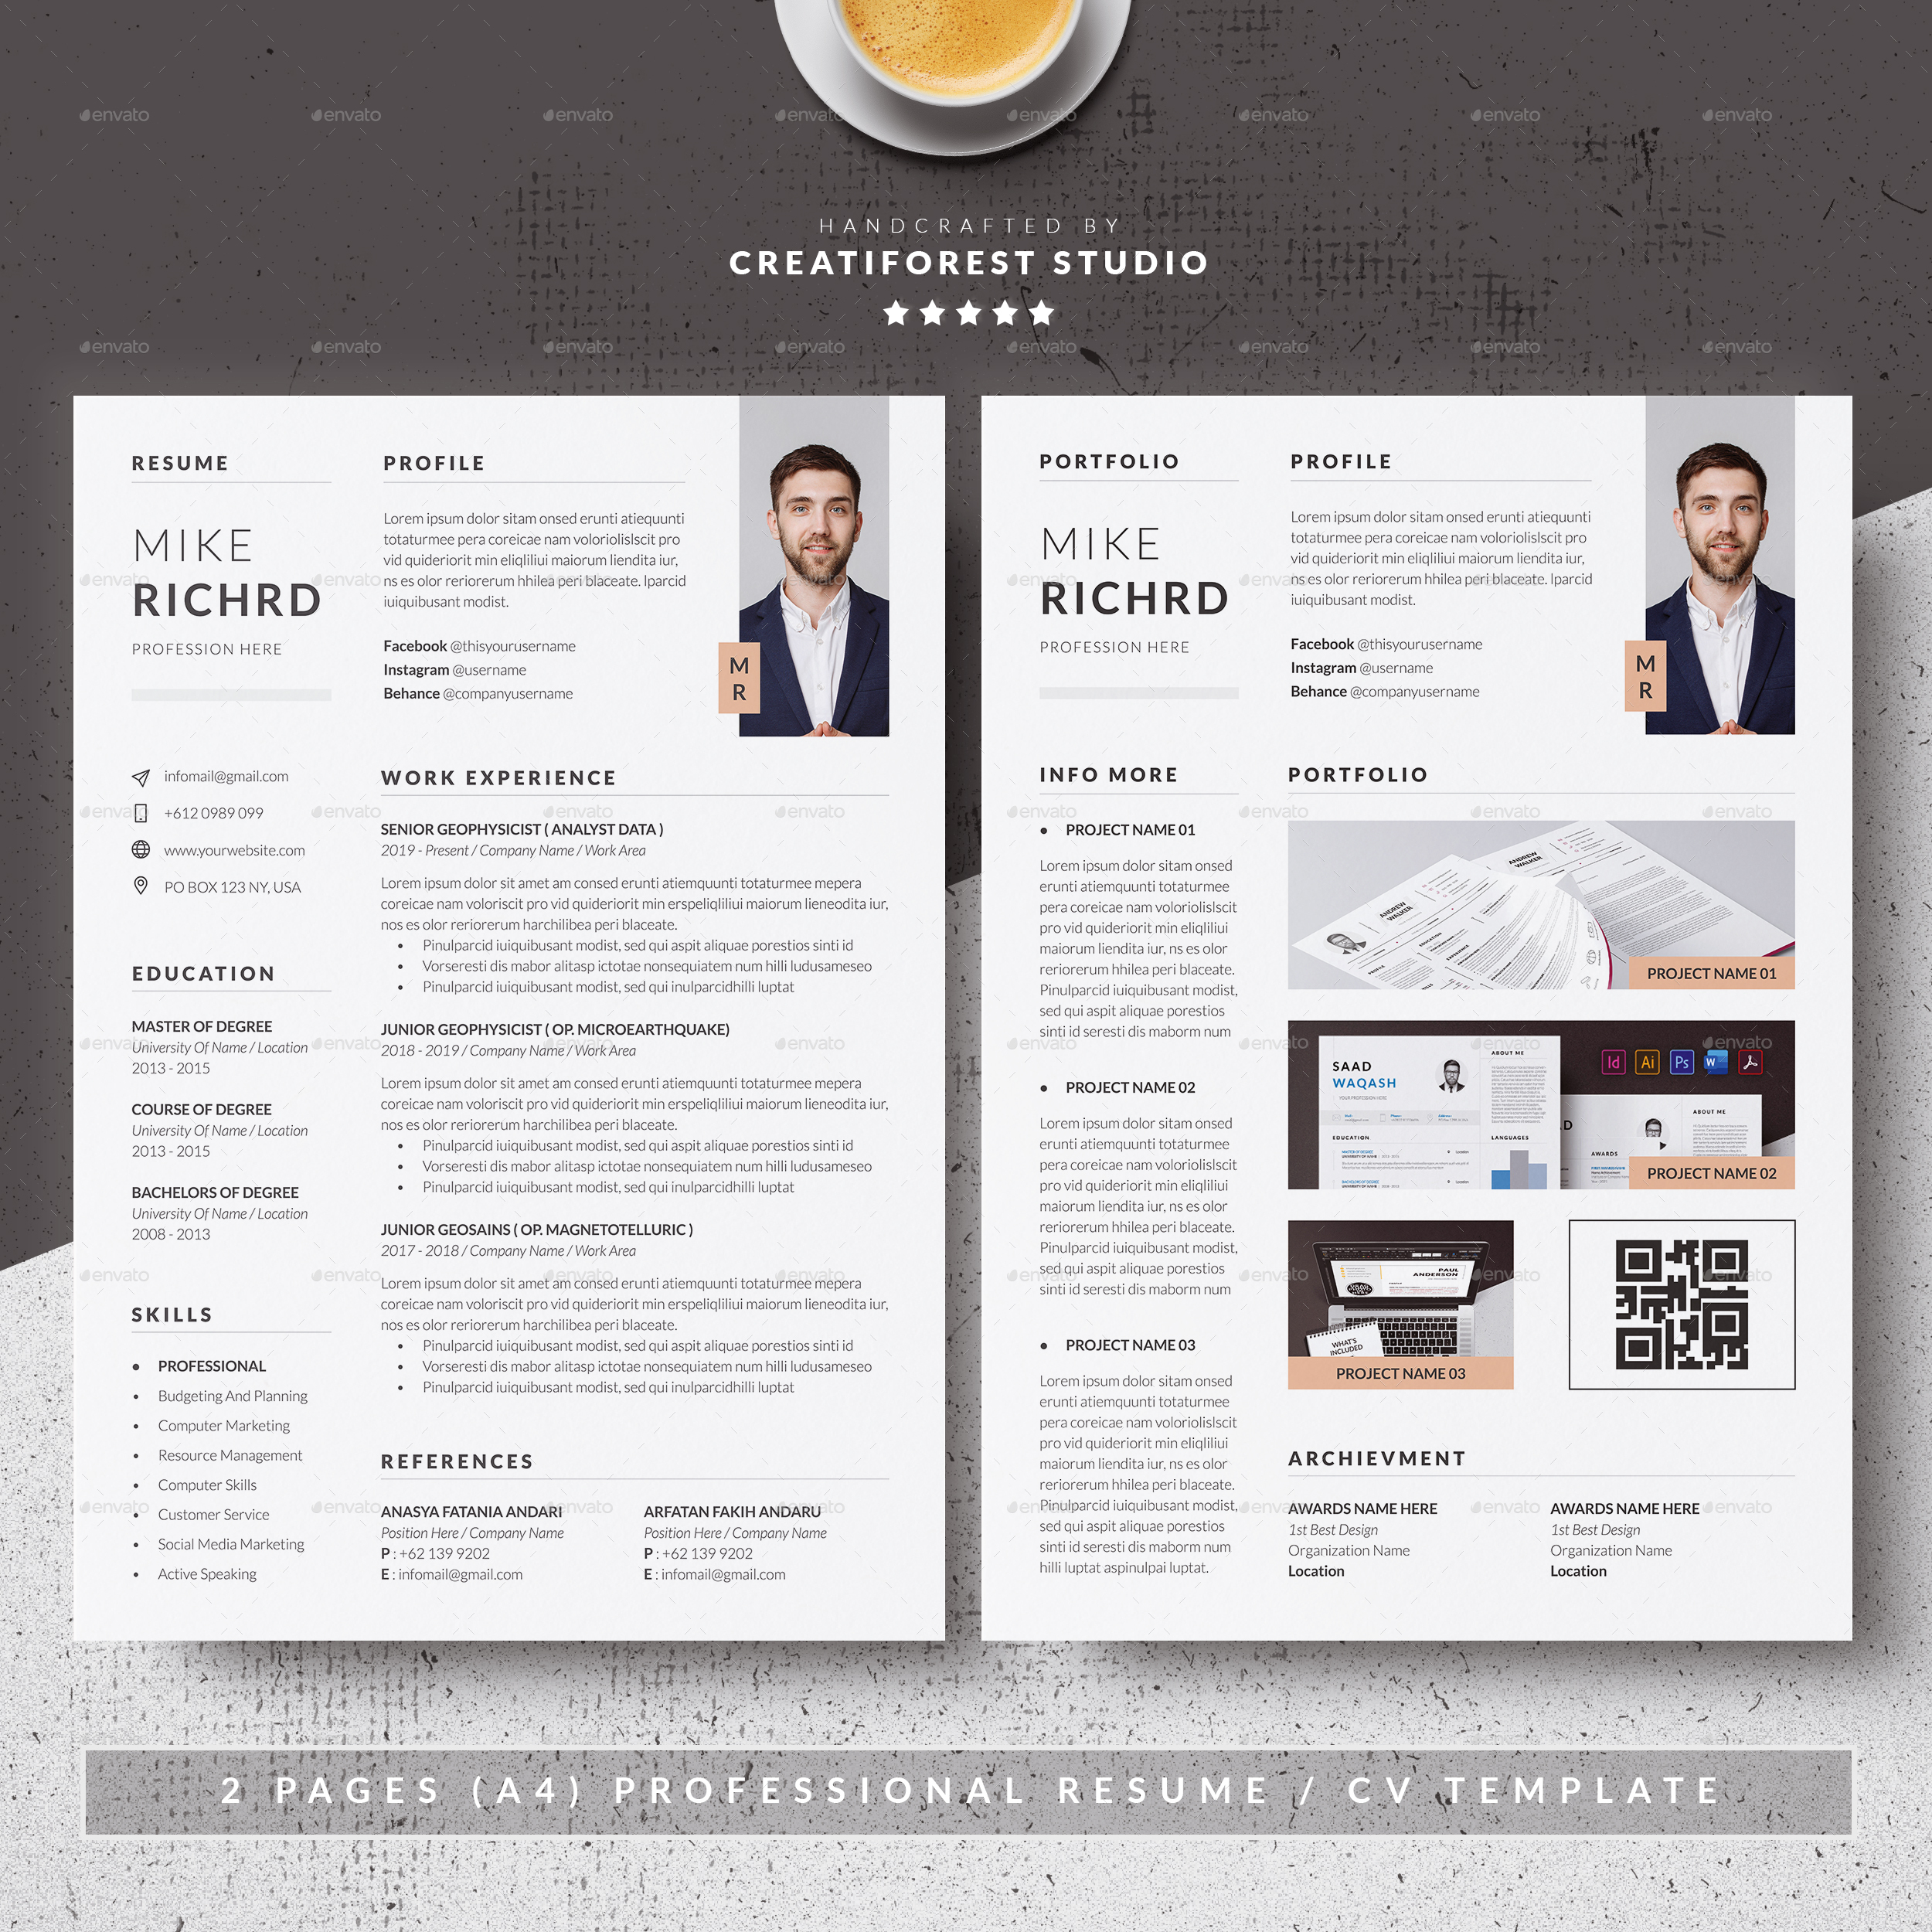 Resume / CV Template, Print Templates | GraphicRiver